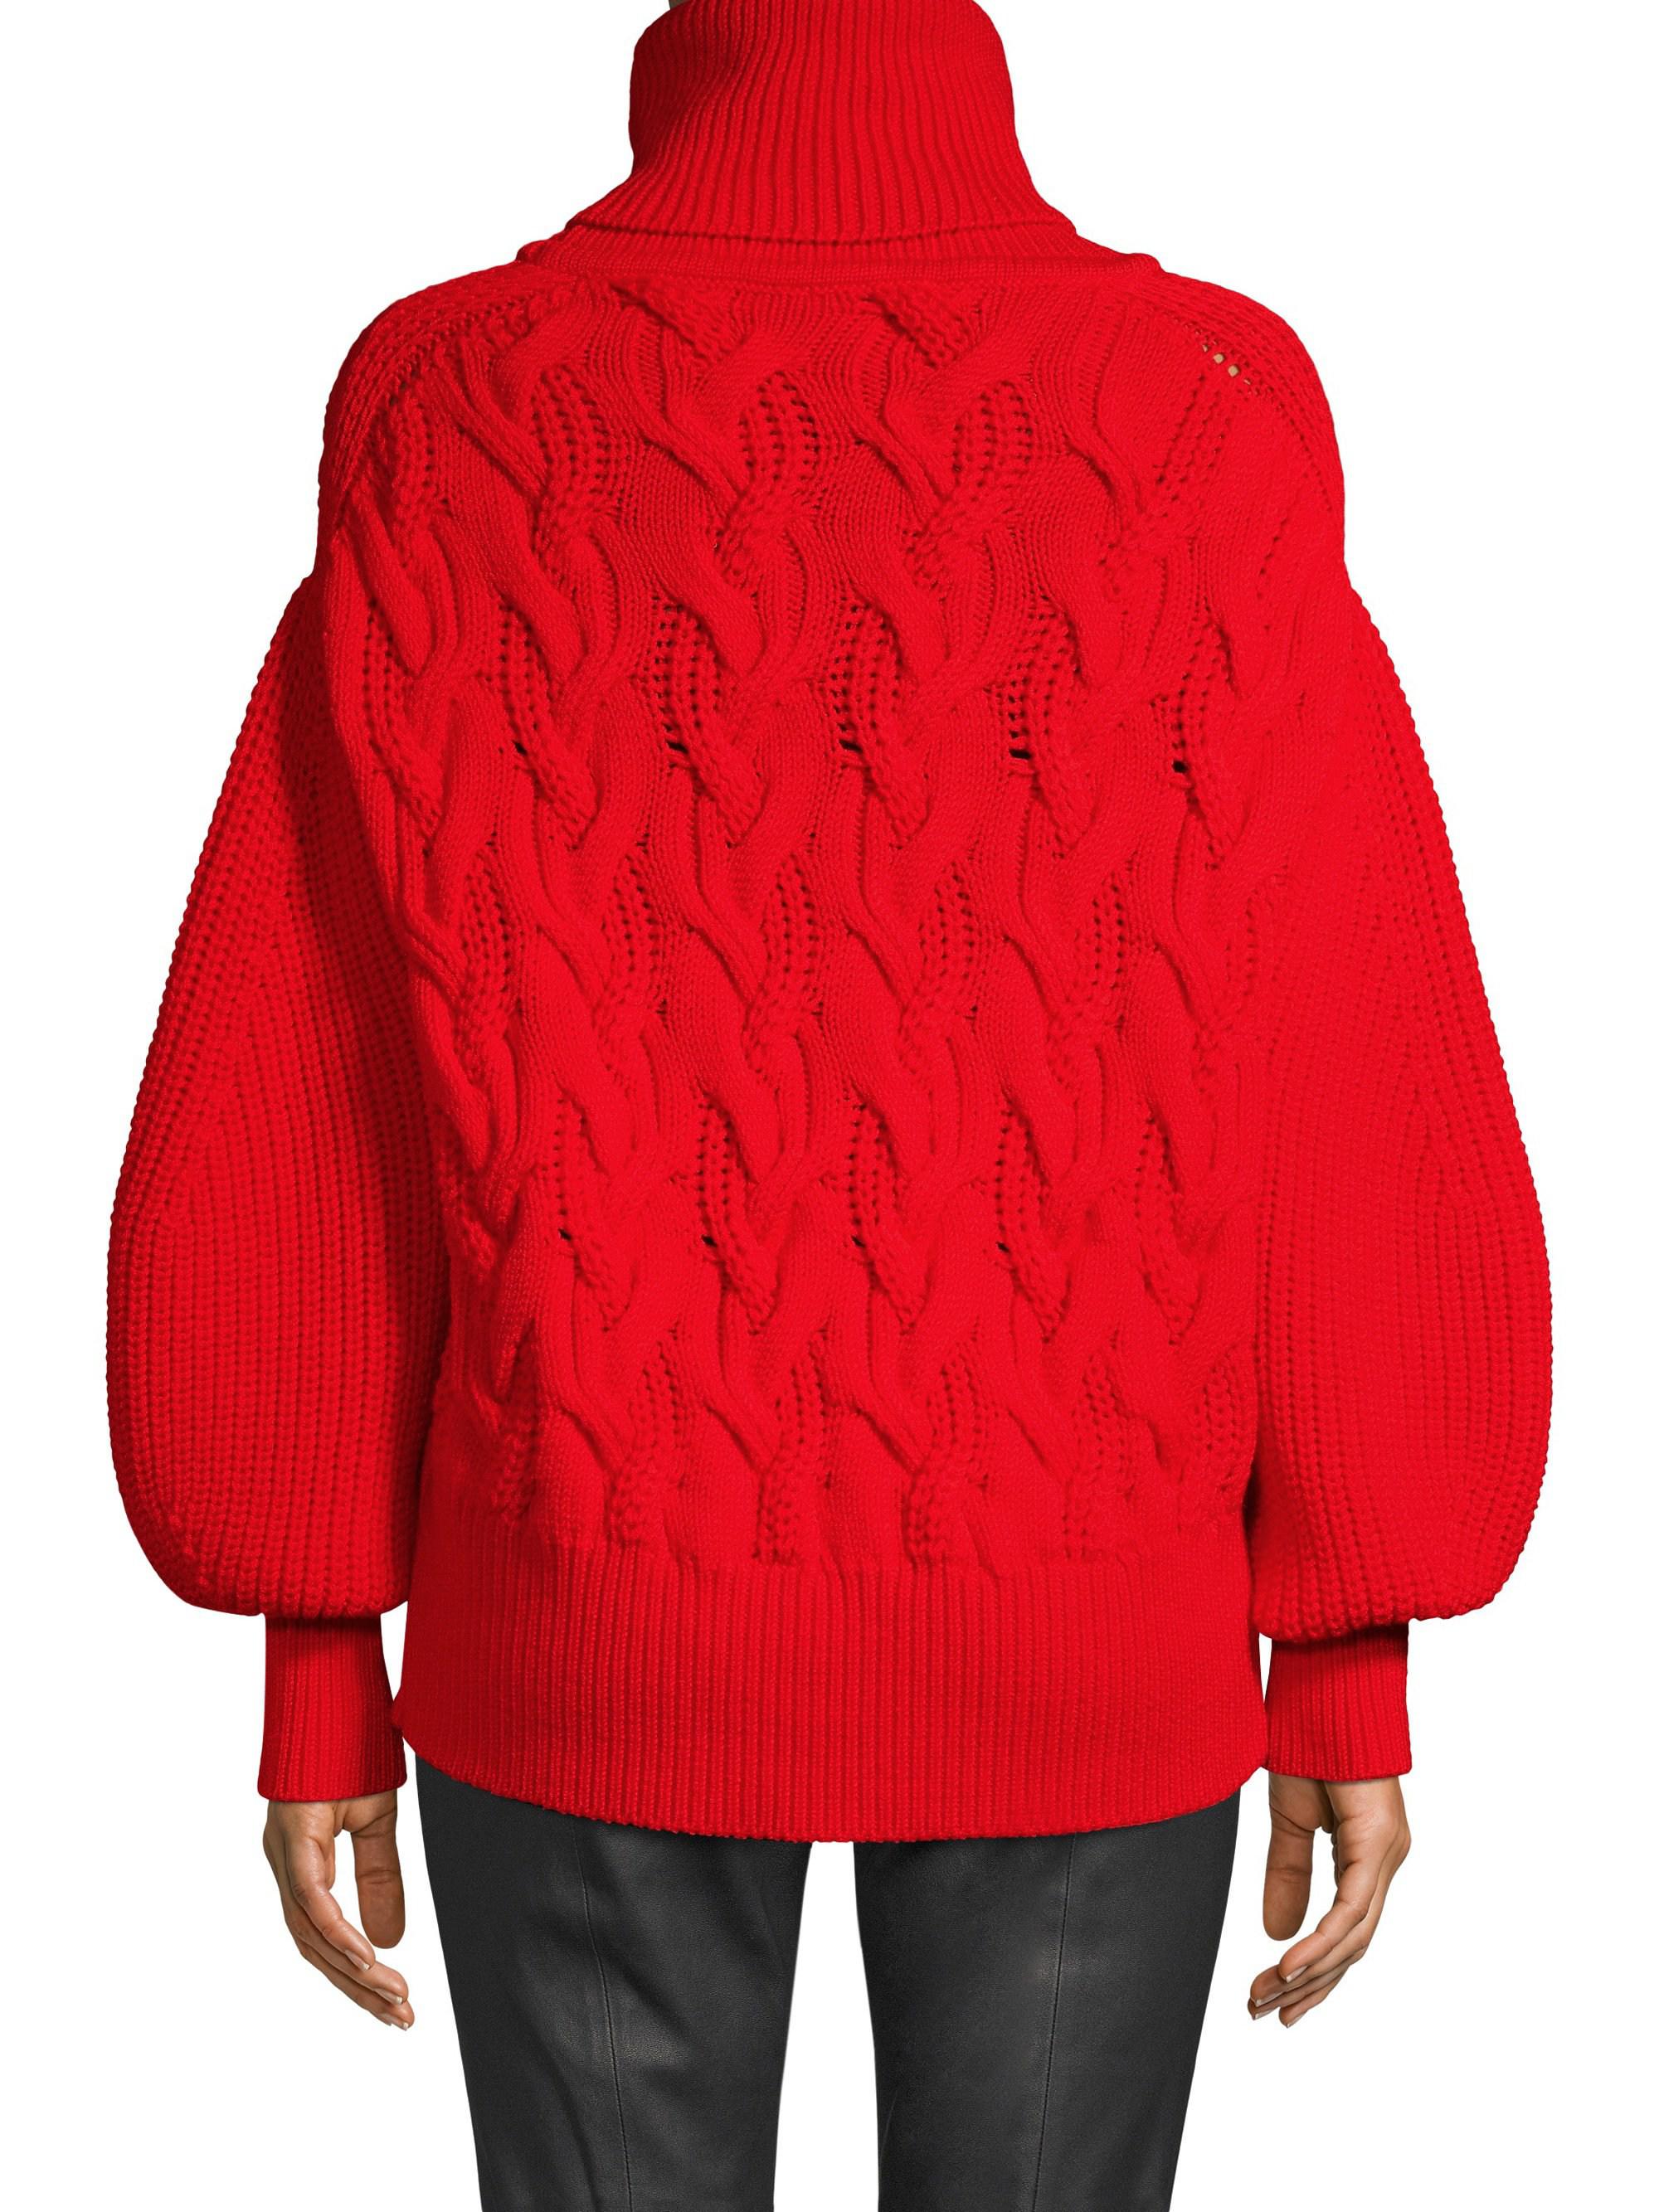 hugo boss cable knit jumper